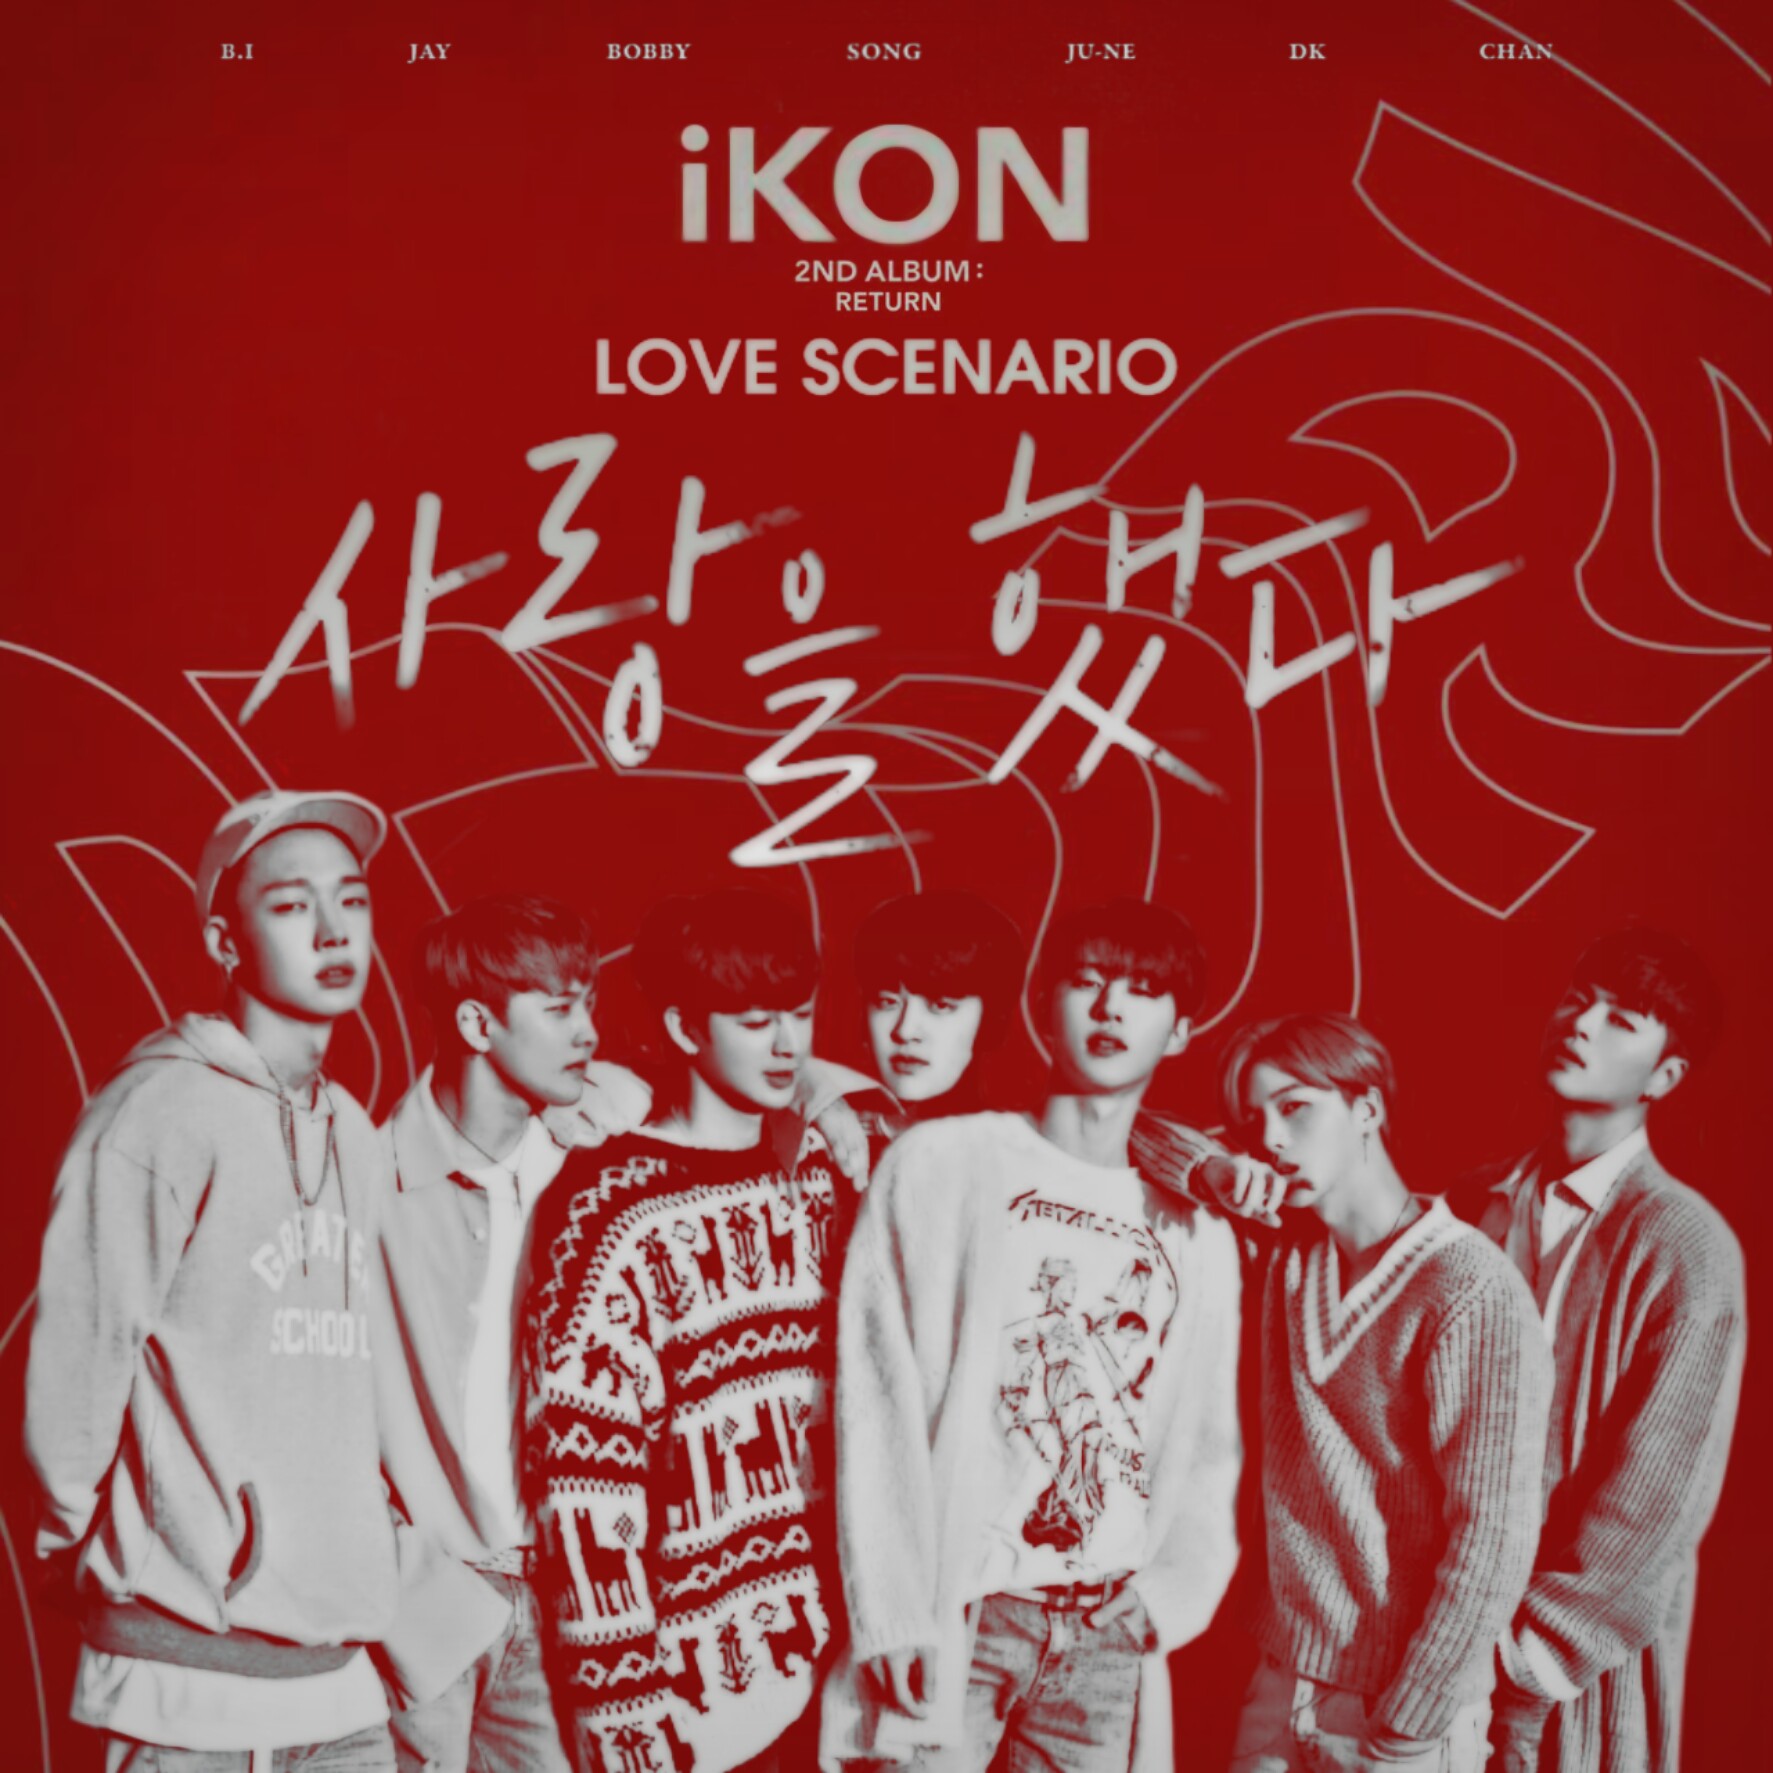 Download Lagu Ikon Love Scenario Ilkpop